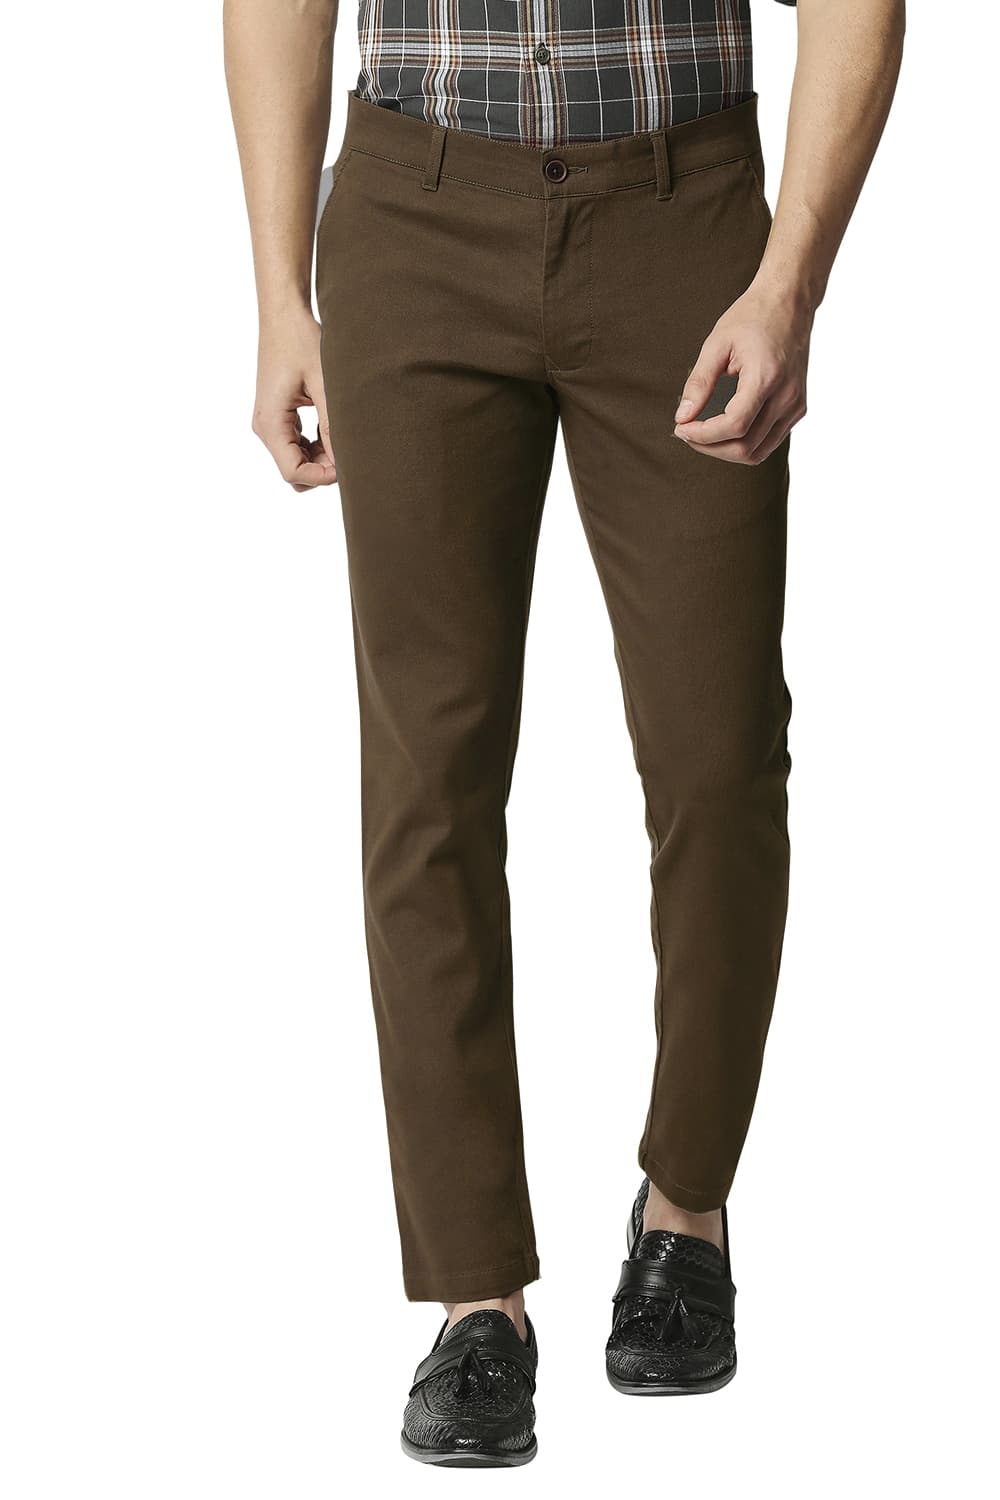 Basics | Men's Dark Brown Cotton Blend Solid Trouser 0